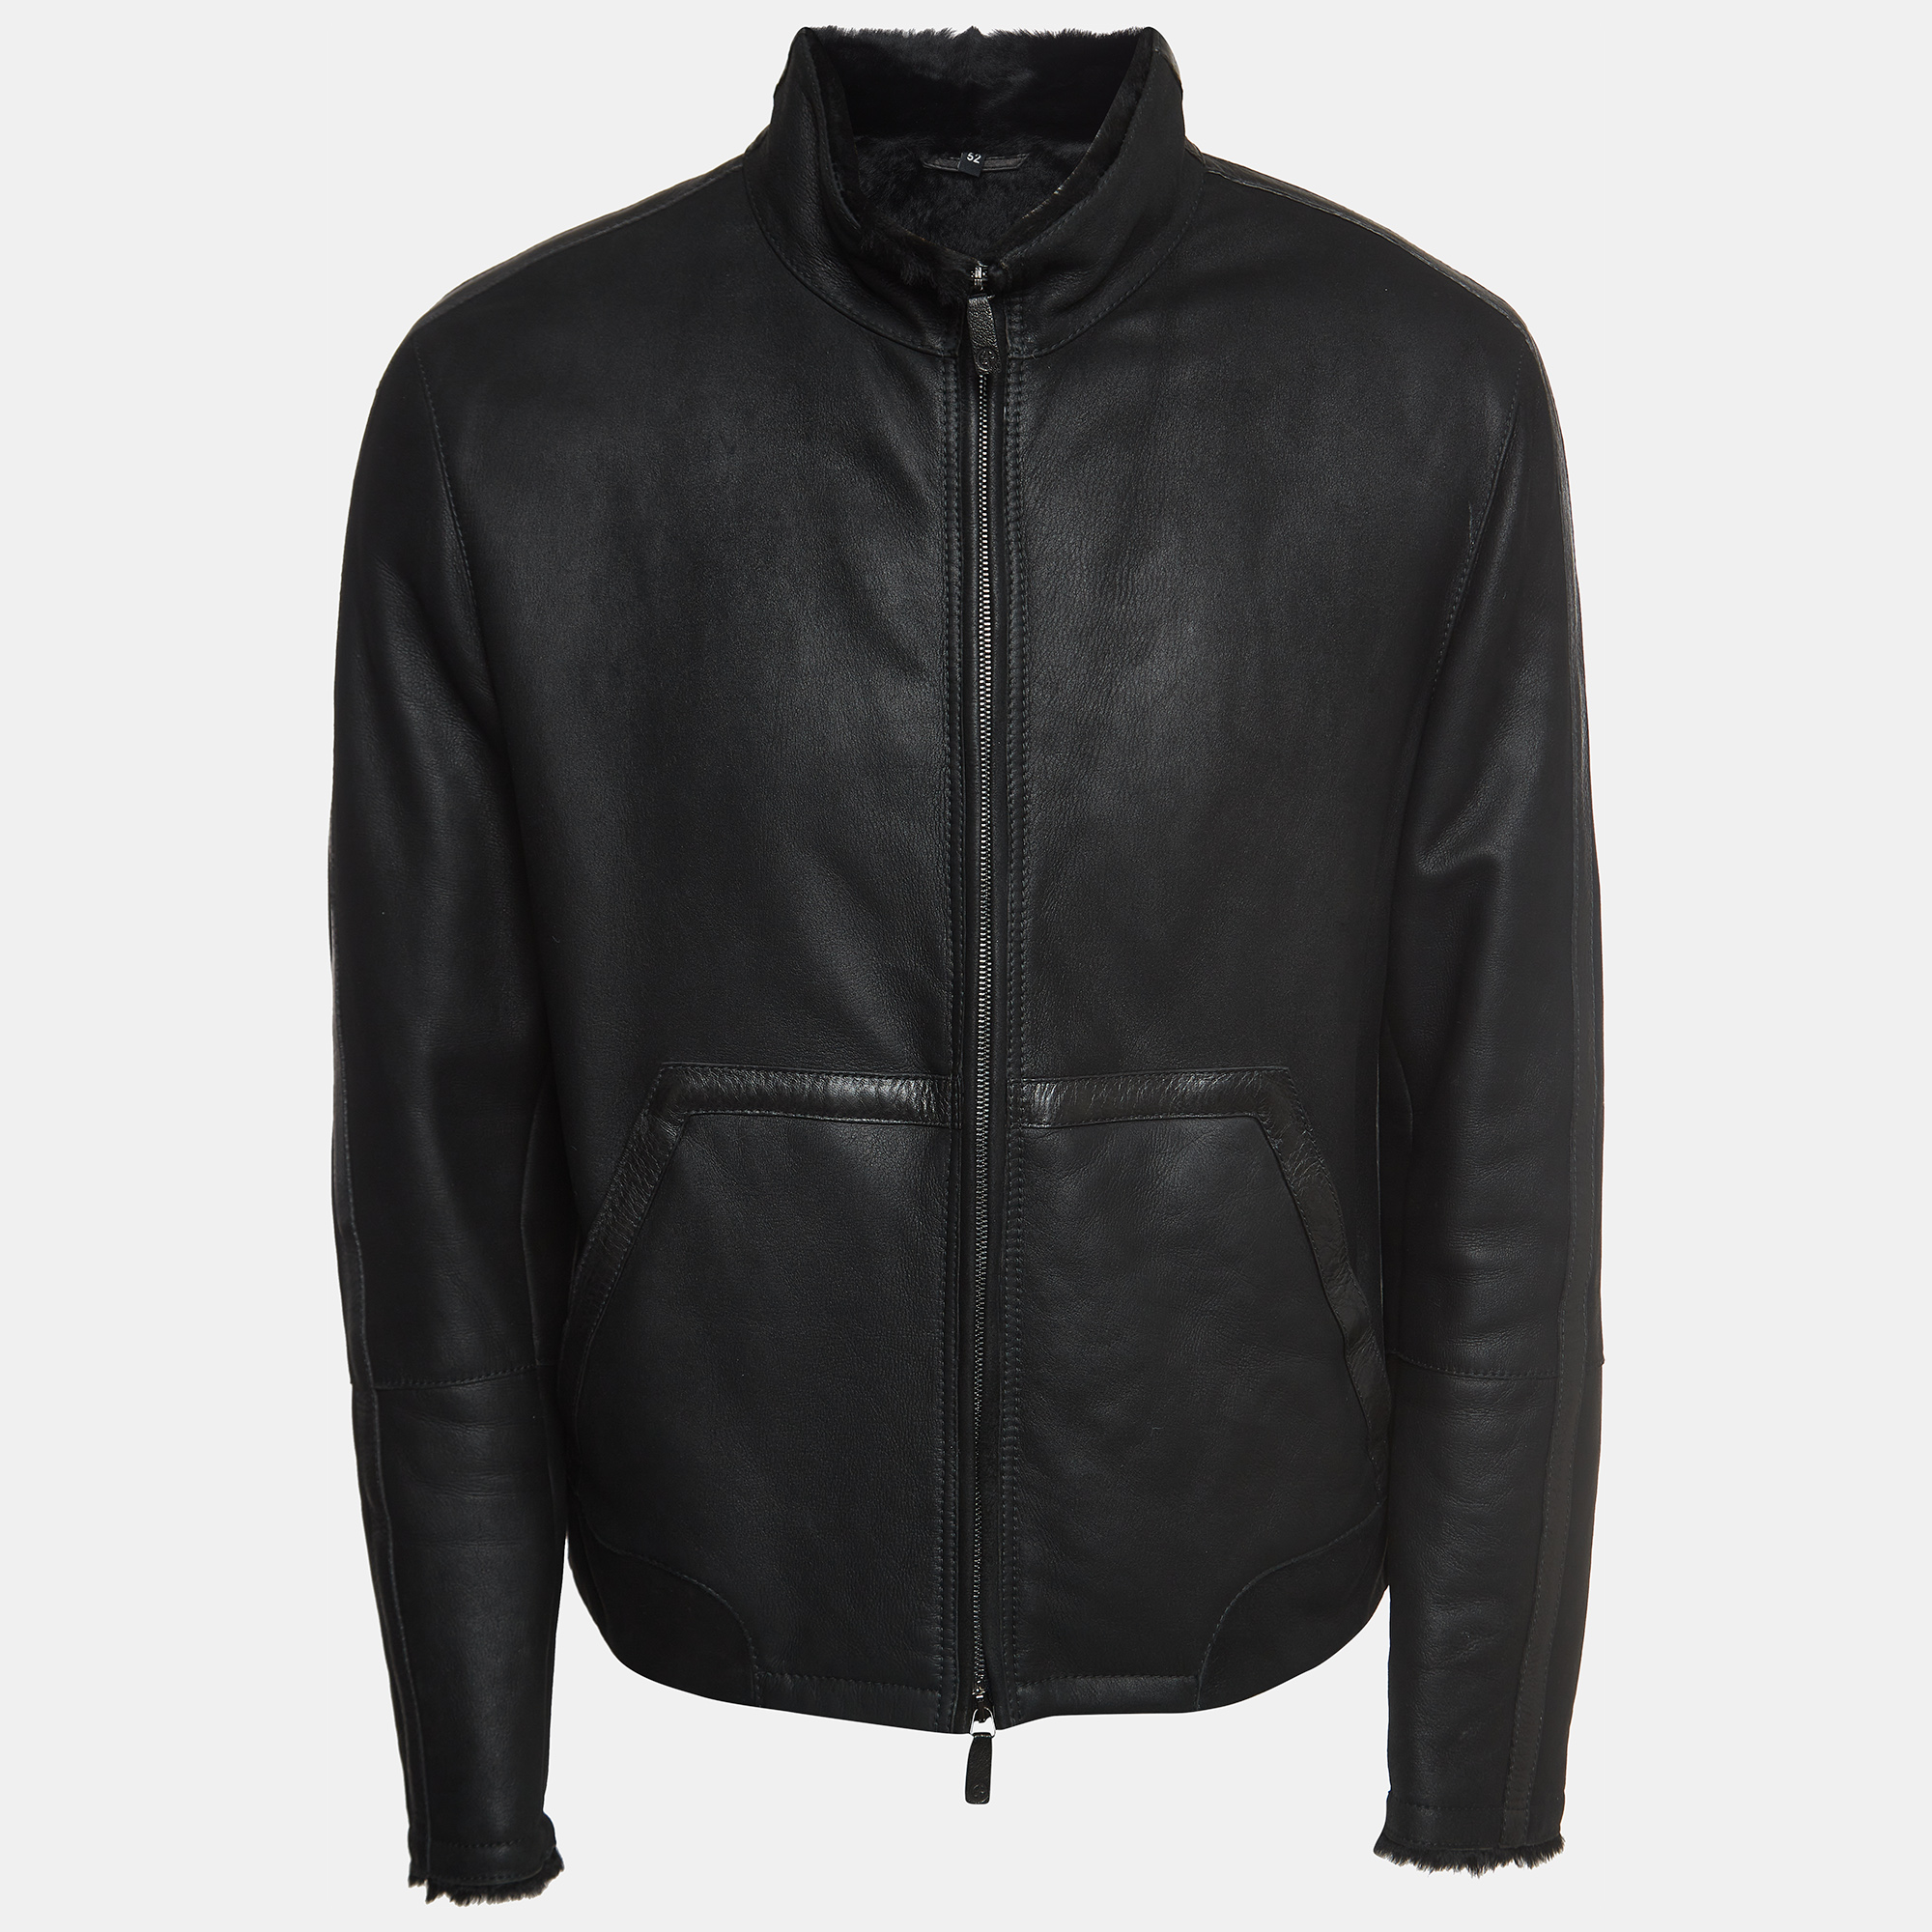 Giorgio Armani Black Leather And Fur Zipper Jacket XL